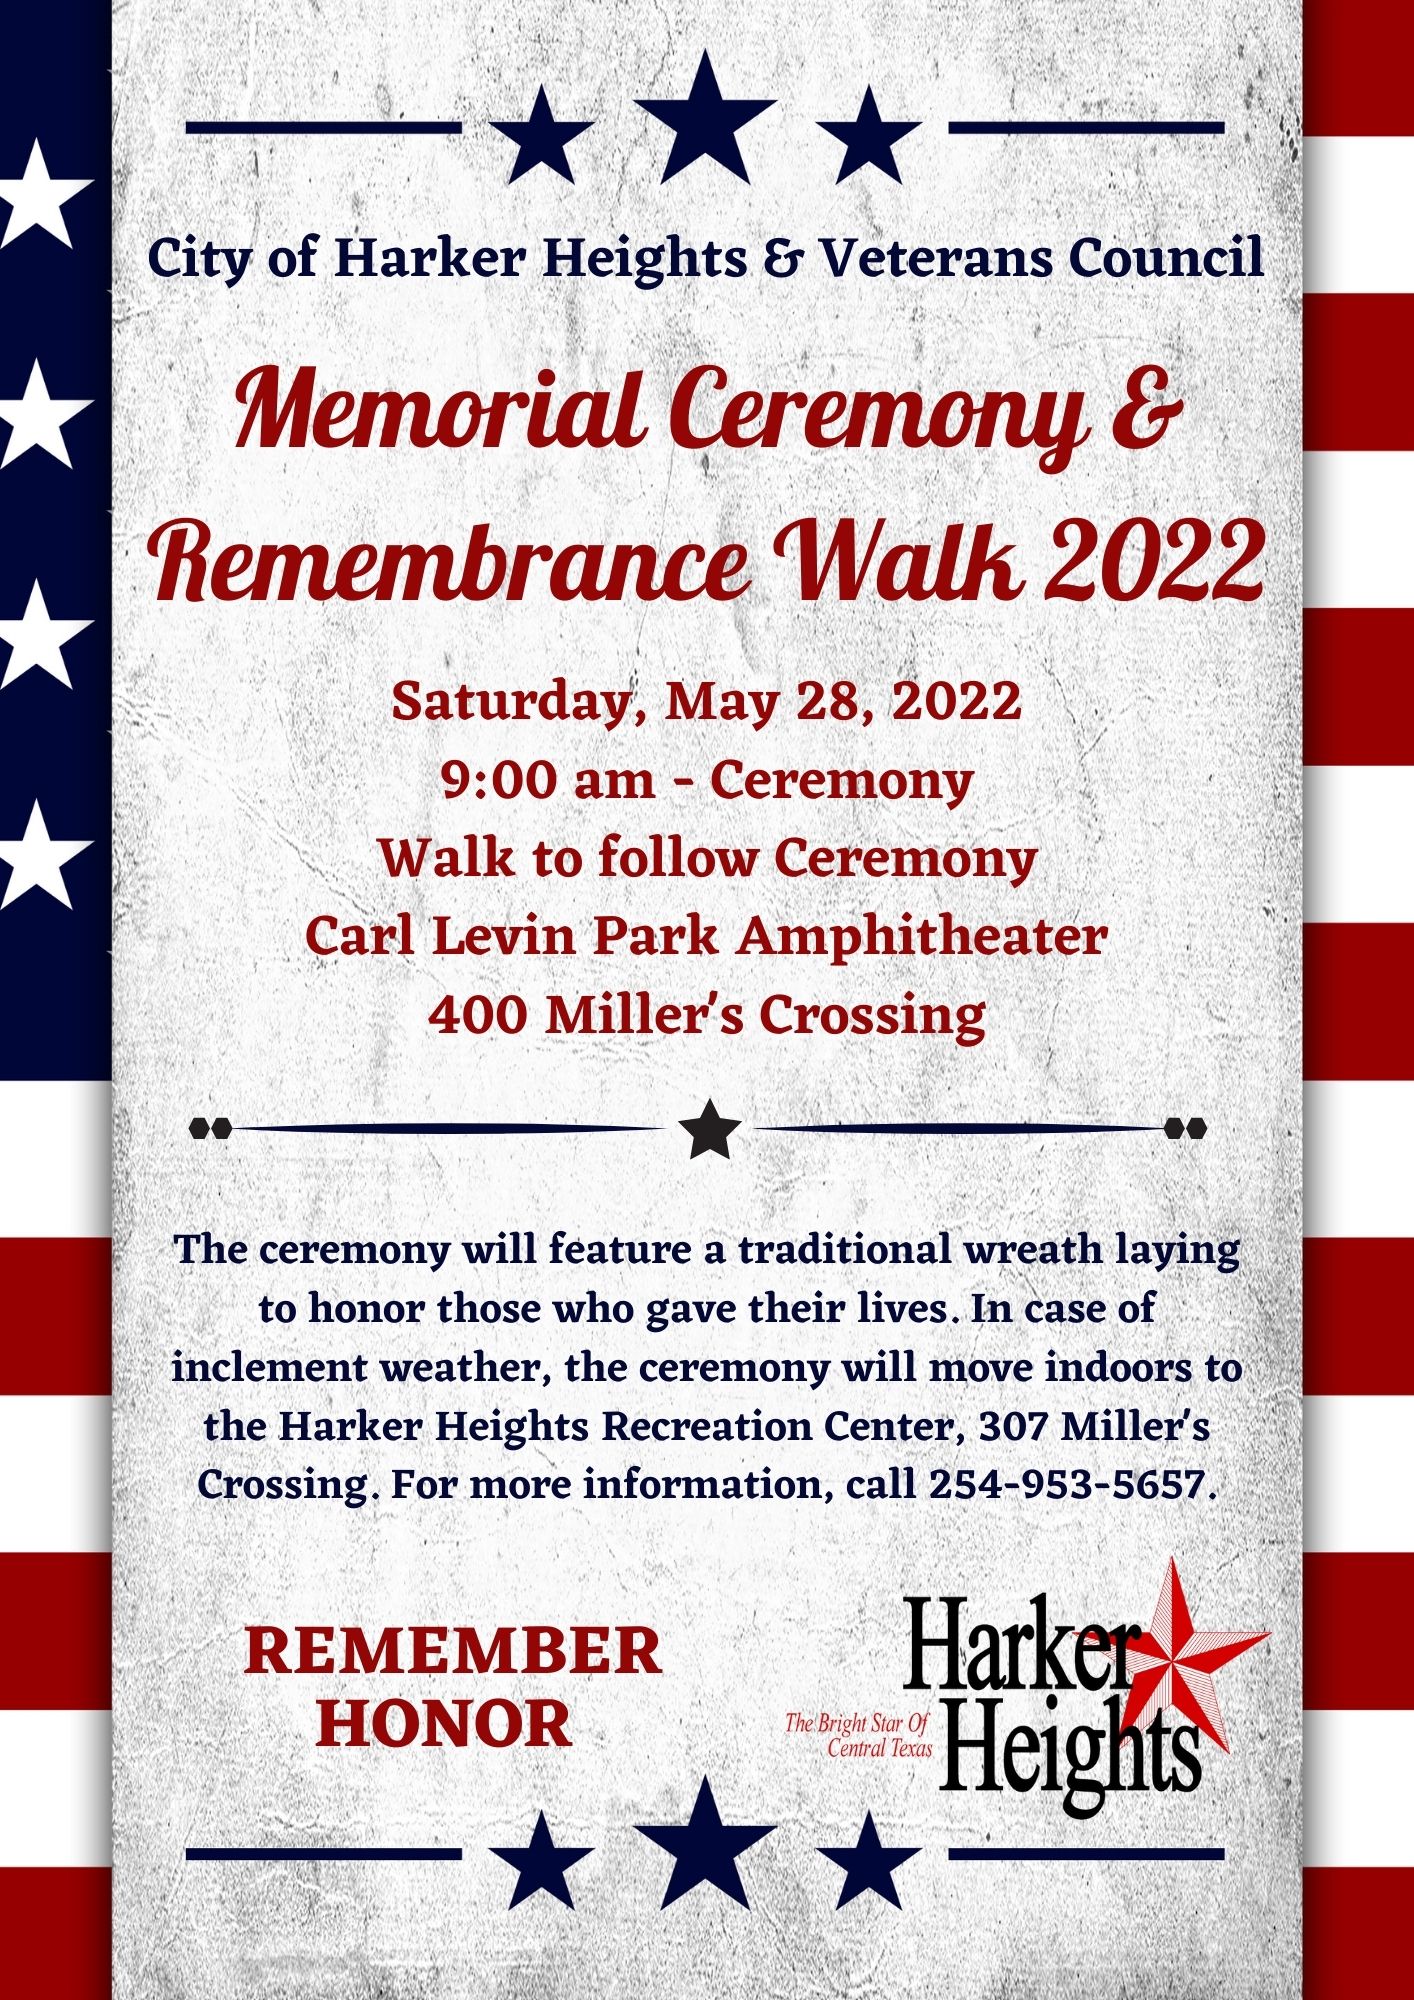 Memorial Ceremony Remembrance Walk 2022